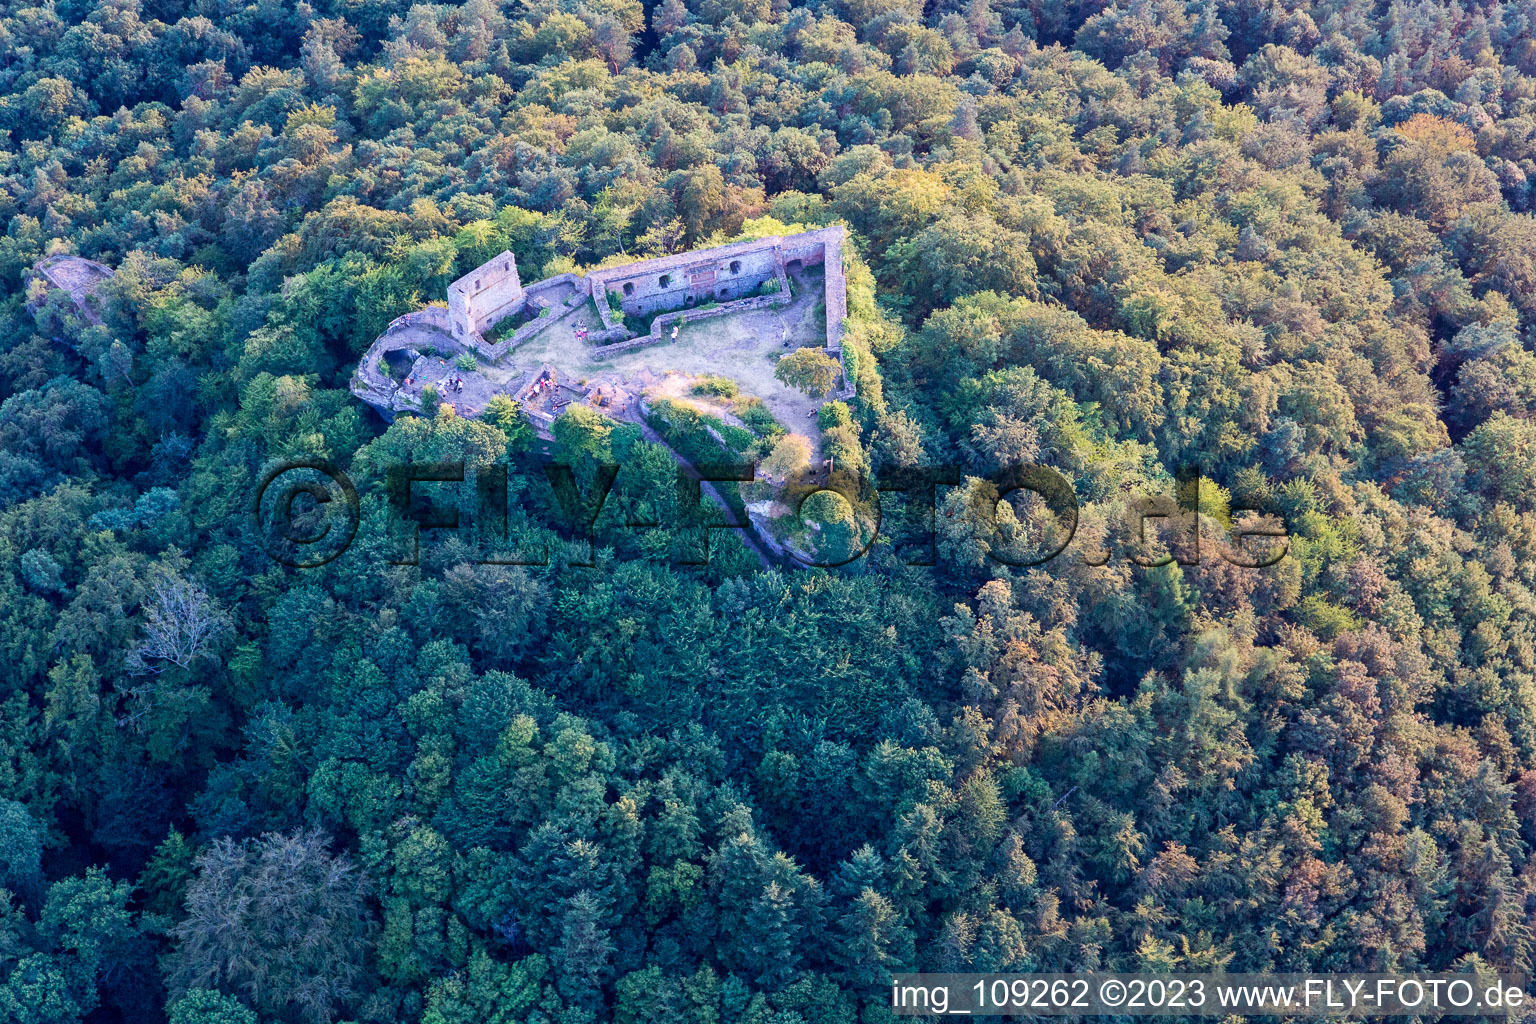 Aerial view of Lindelbrunn ruins in Vorderweidenthal in the state Rhineland-Palatinate, Germany